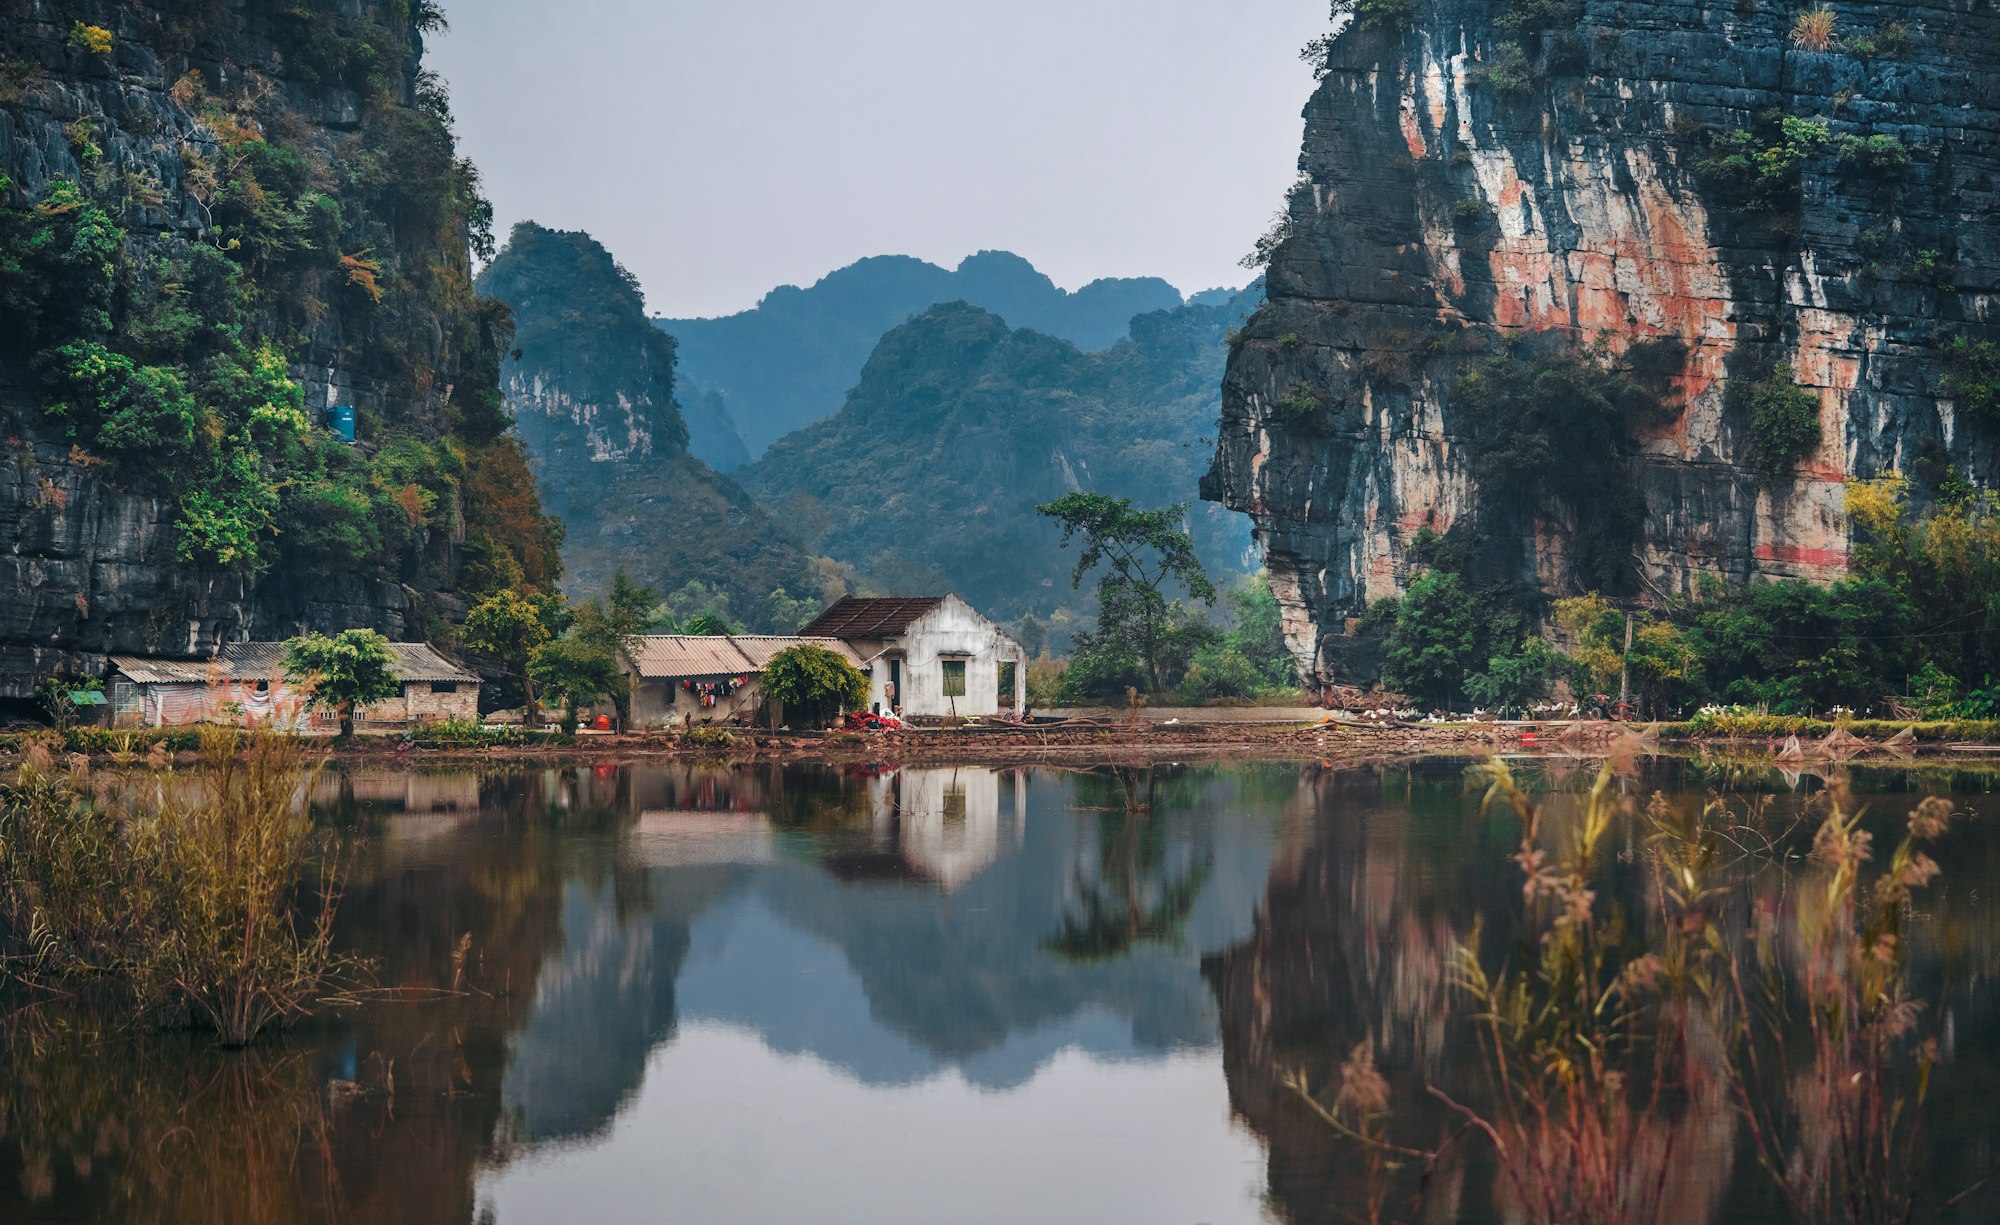 Experience the Unique Ta Van Village in Northwest Vietnam